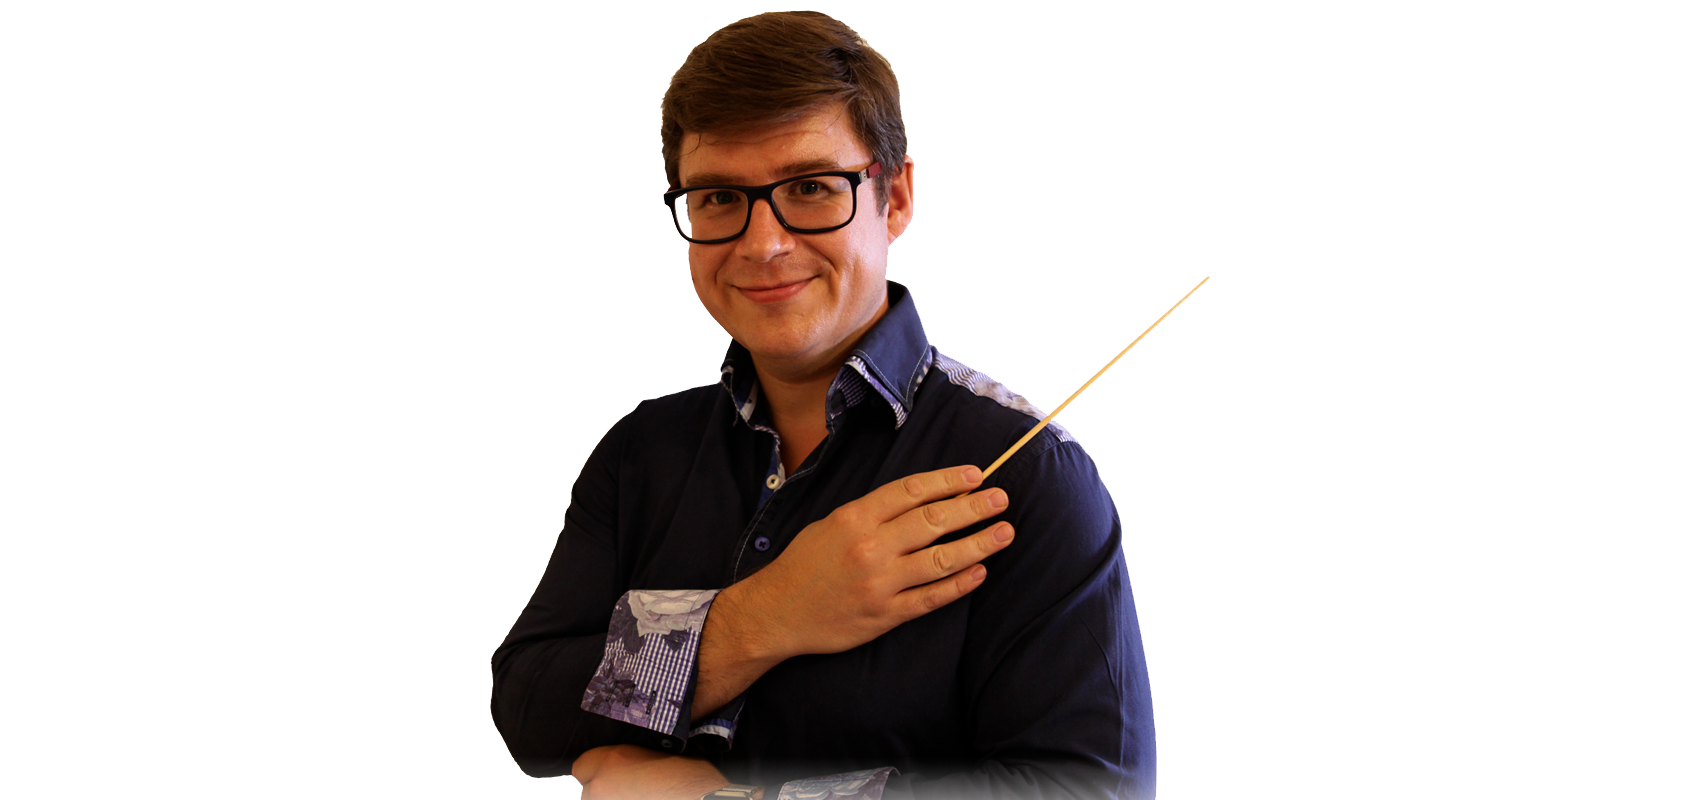 David Pearce - musical director of the Slidekicks Trombone Quartet